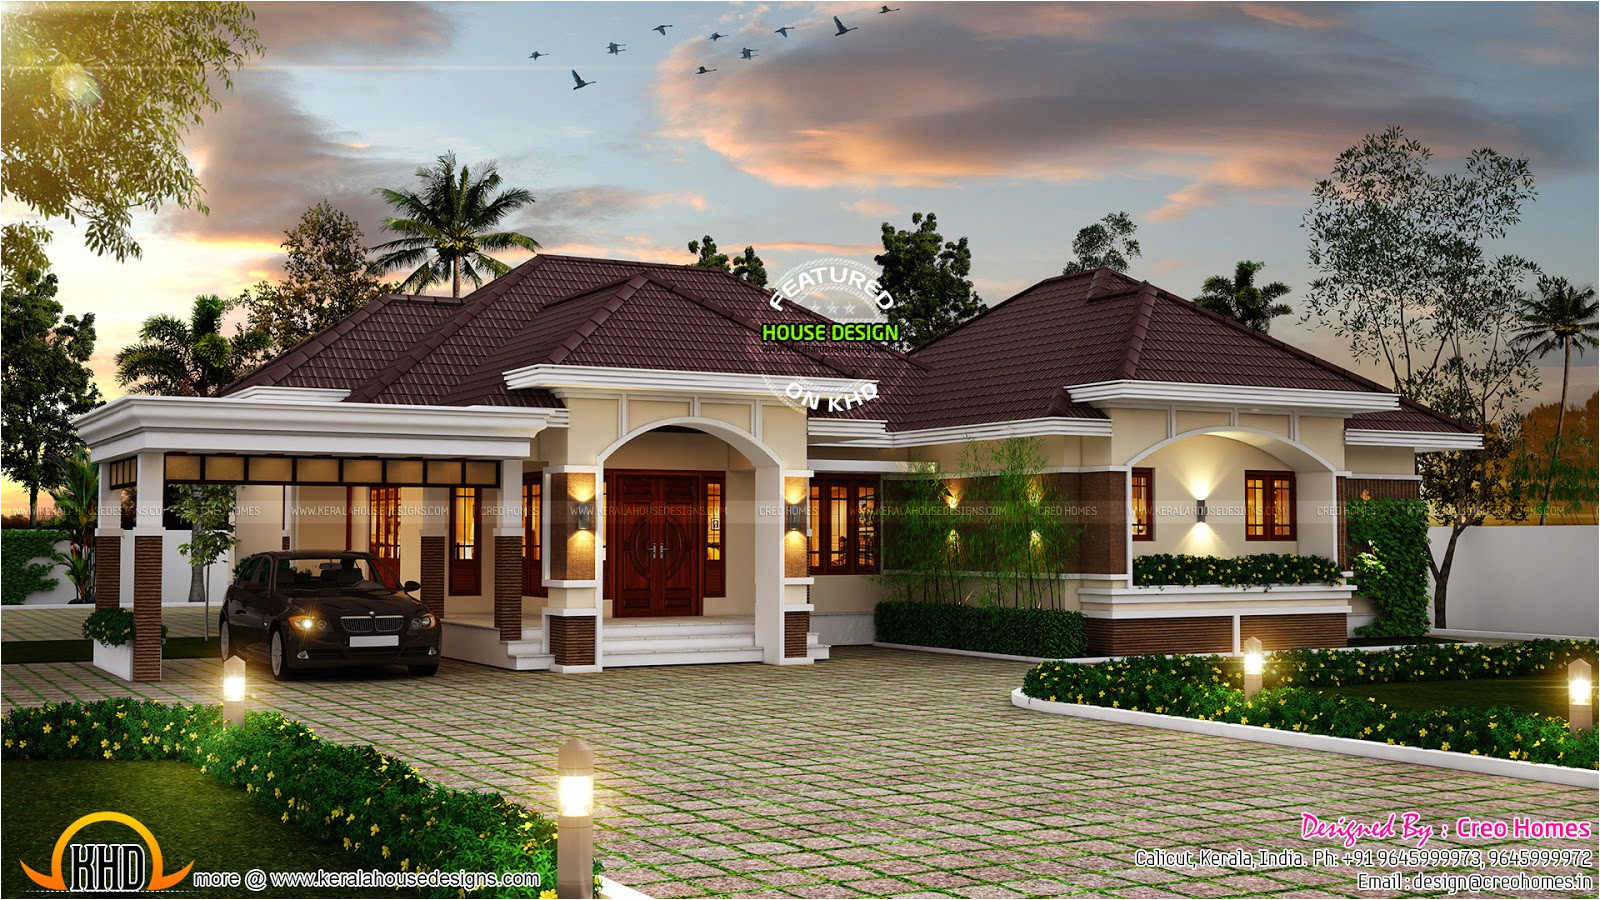 outstanding bungalow in kerala